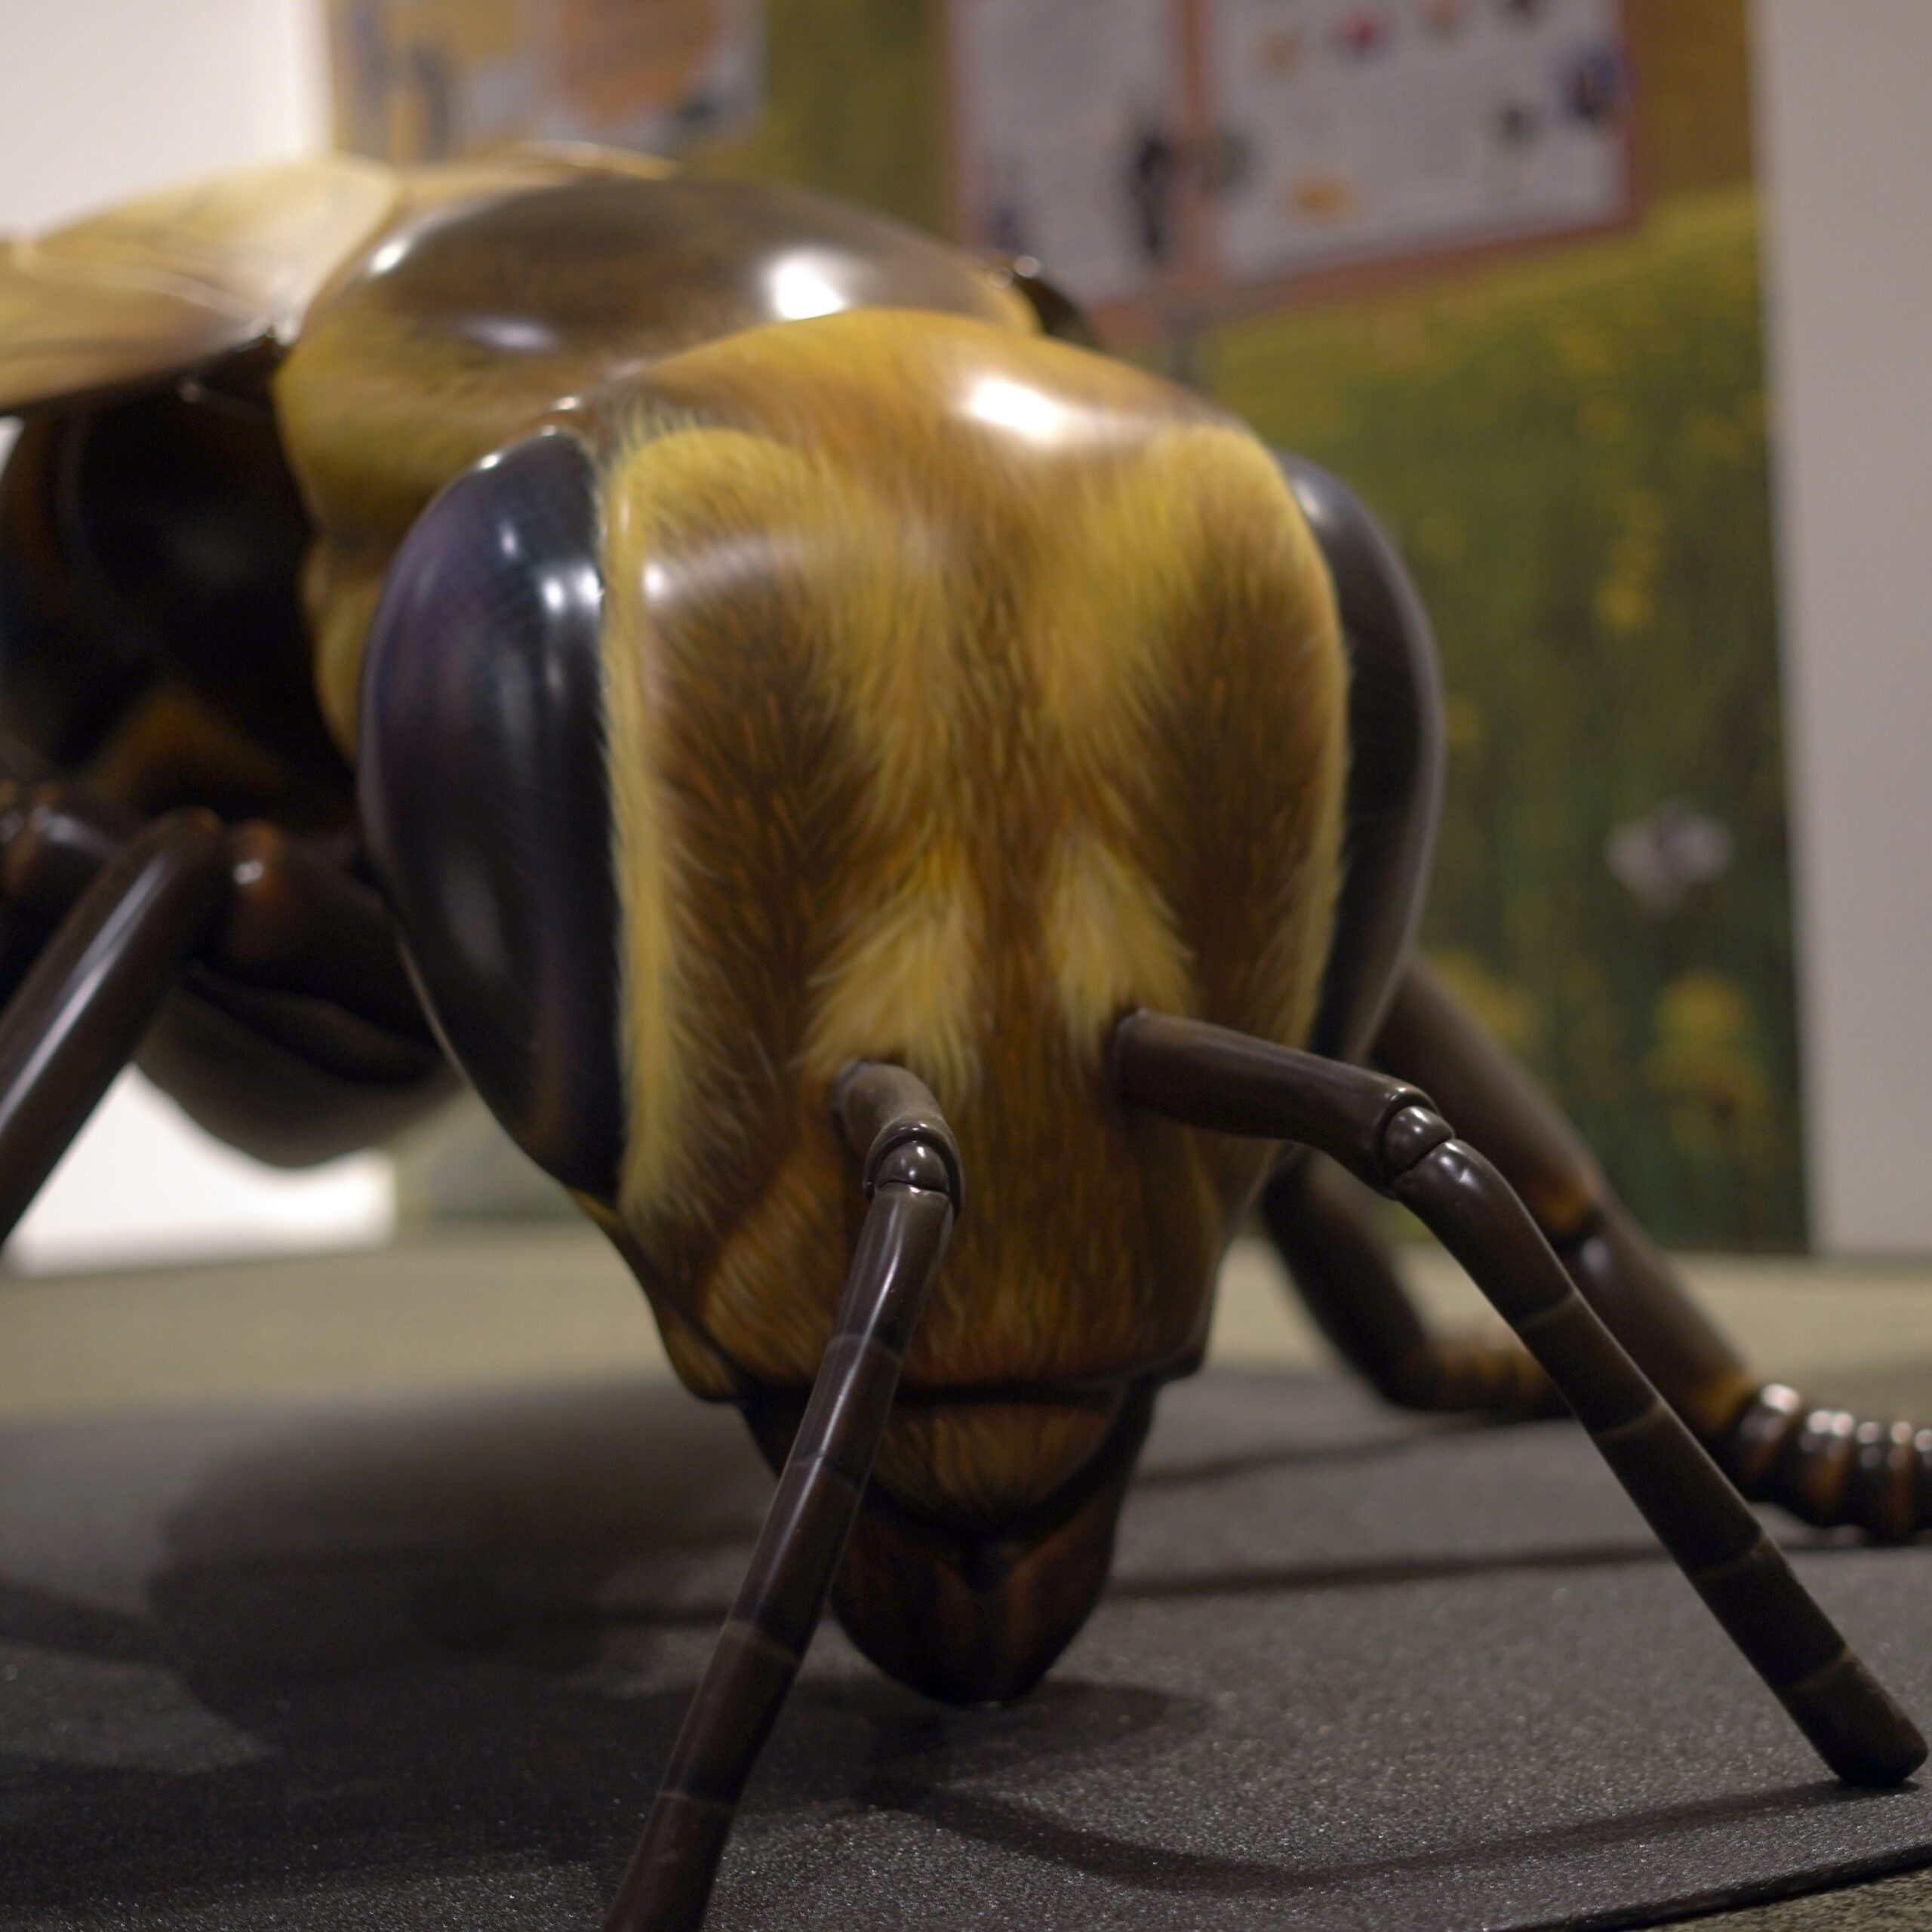 climbable bee model